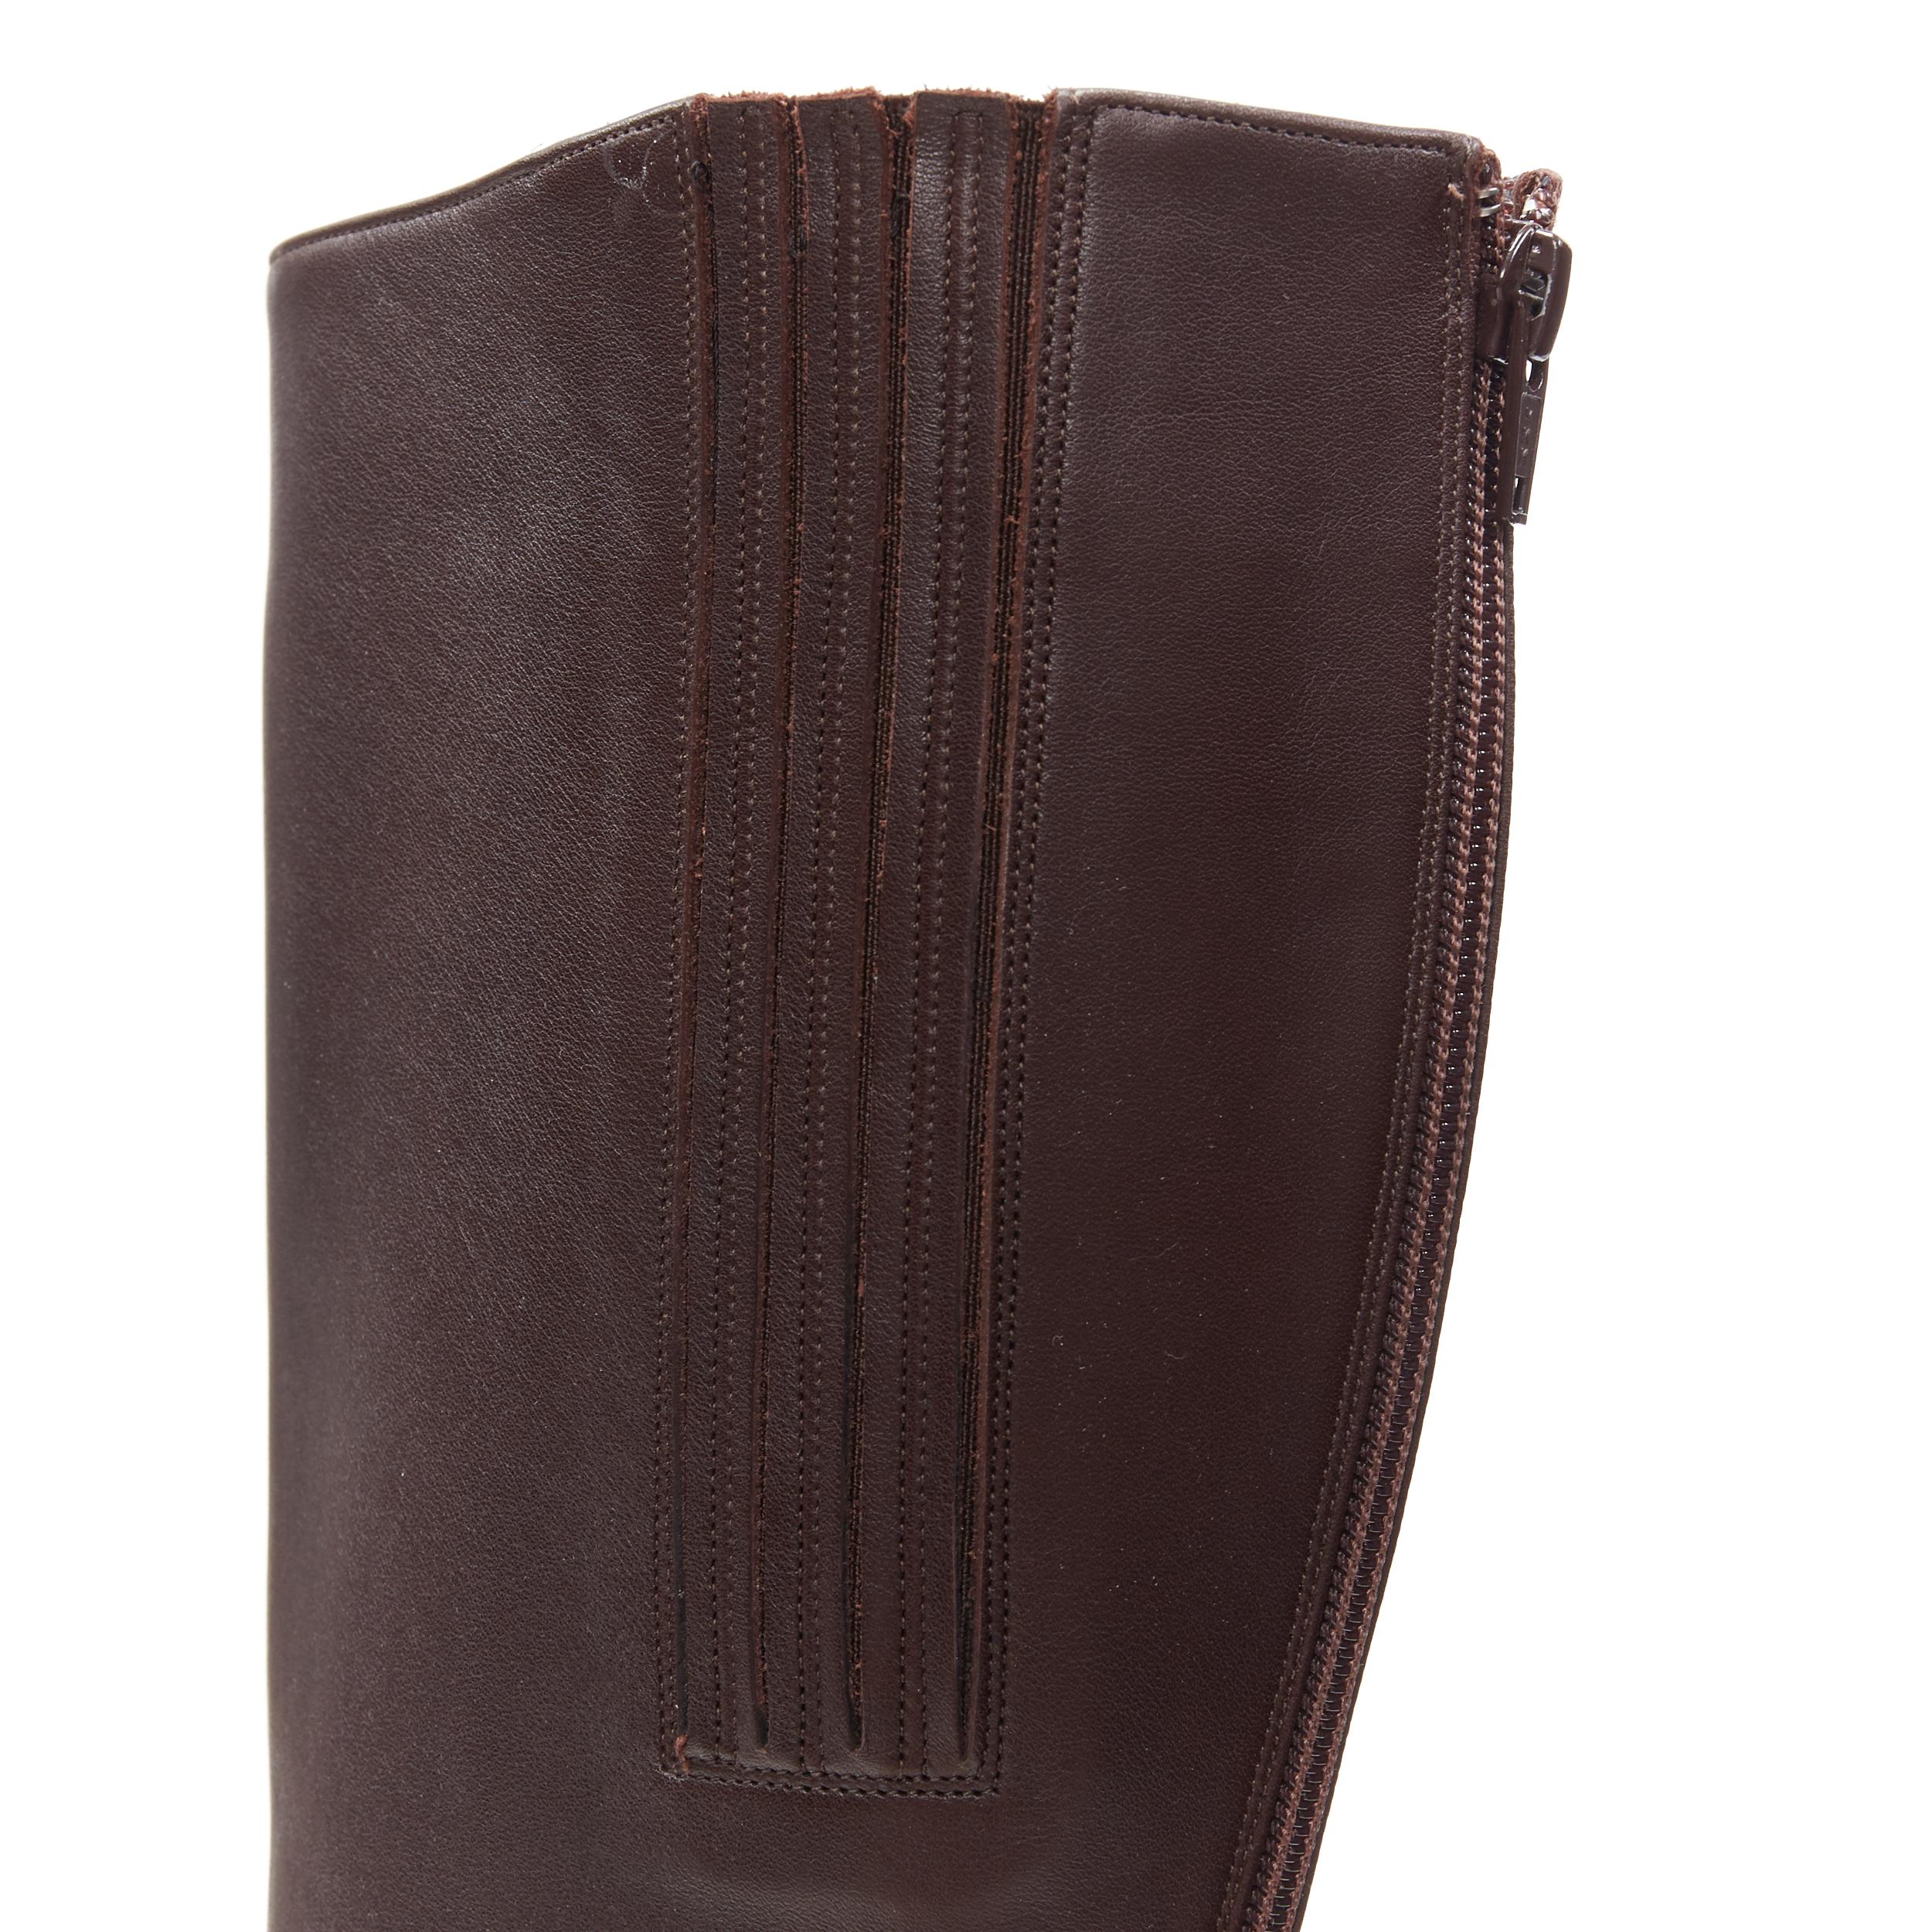 CHRISTIAN LOUBOUTIN dark brown leather almond toe high heel tall boots EU39 6